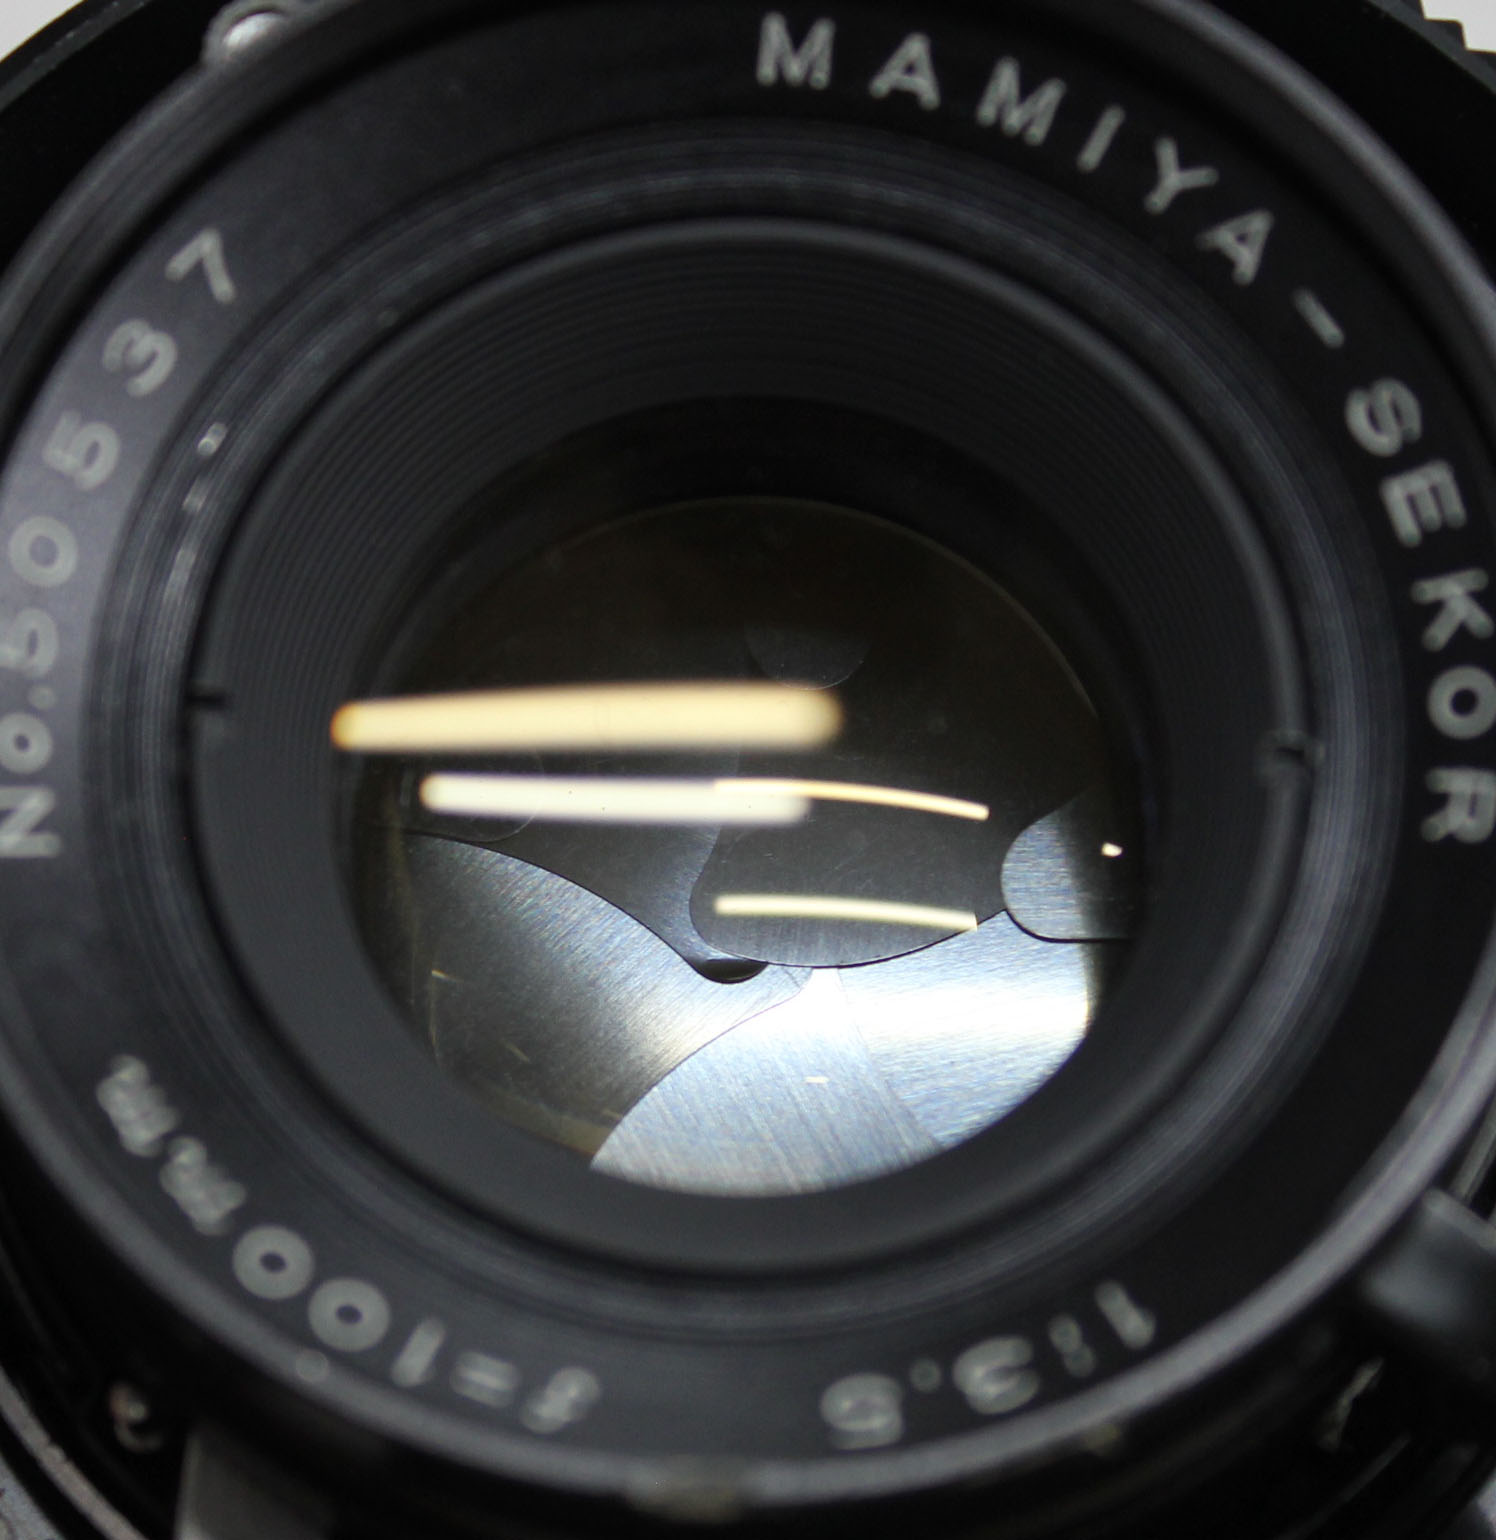 Mamiya Press Super 23 with Mamiya-Sekor 100mm F/3.5, Pint Glass & 6x9 Film Back from Japan Photo 12